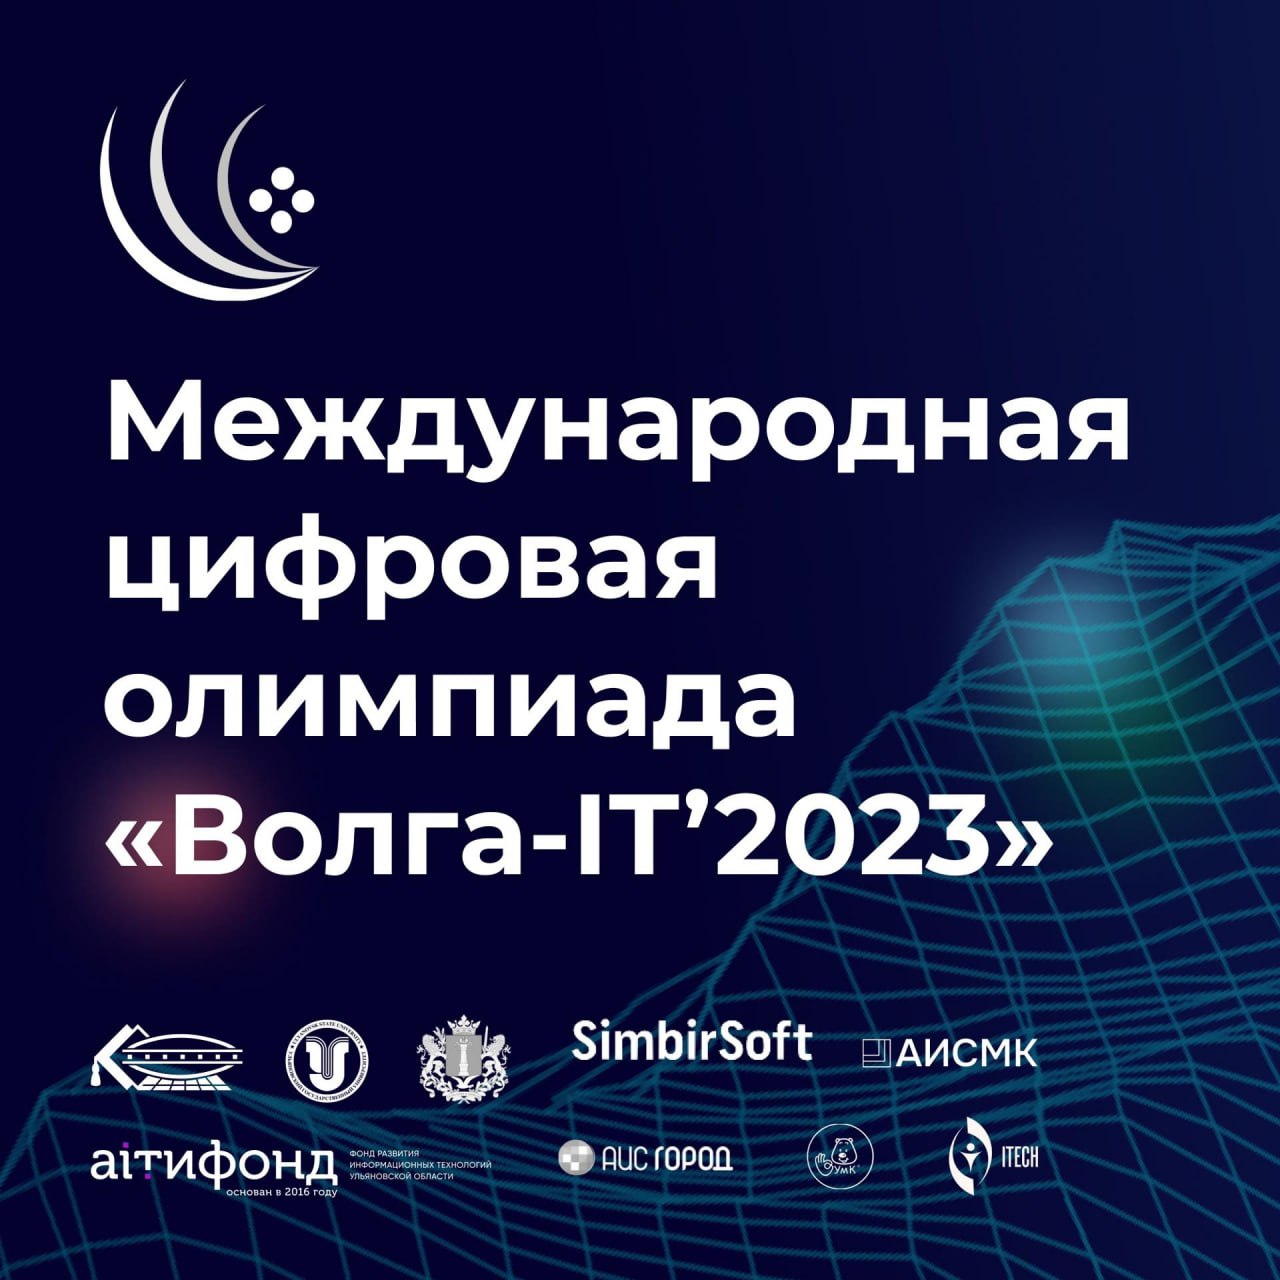 Международная  цифровая  олимпиада  «Волга  -  IT’2023».